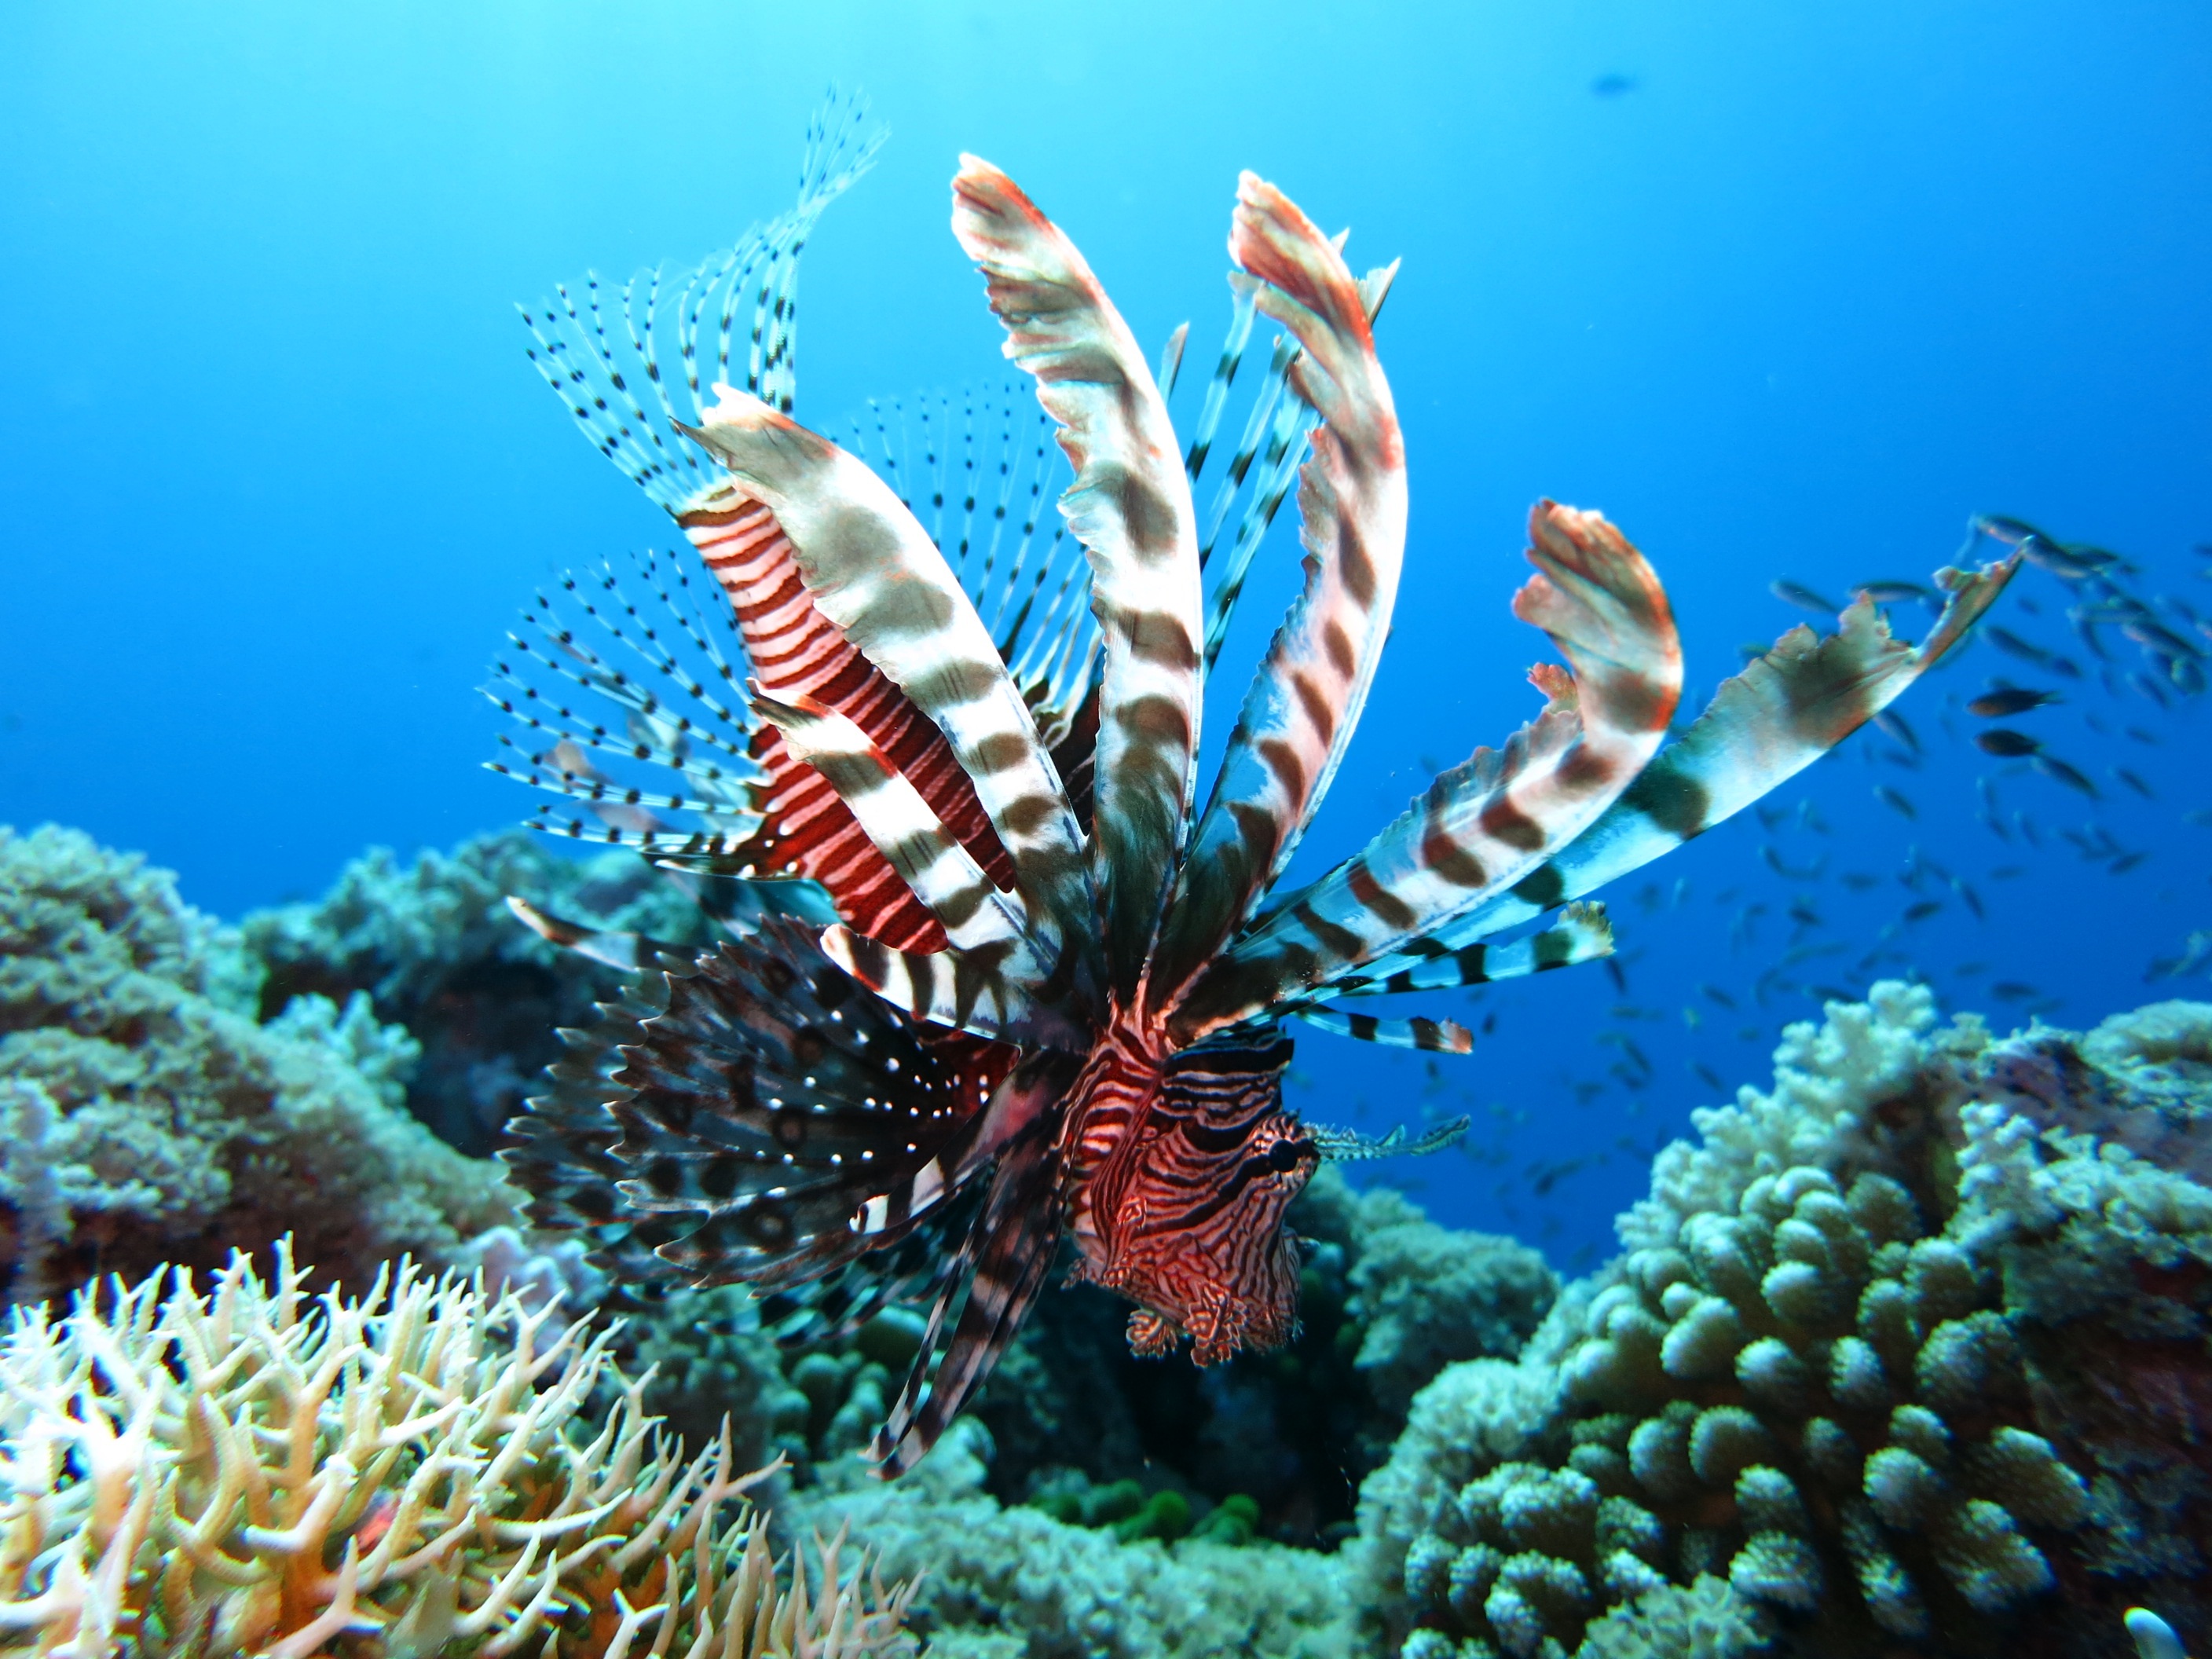 A lionfish swims near coral reefs